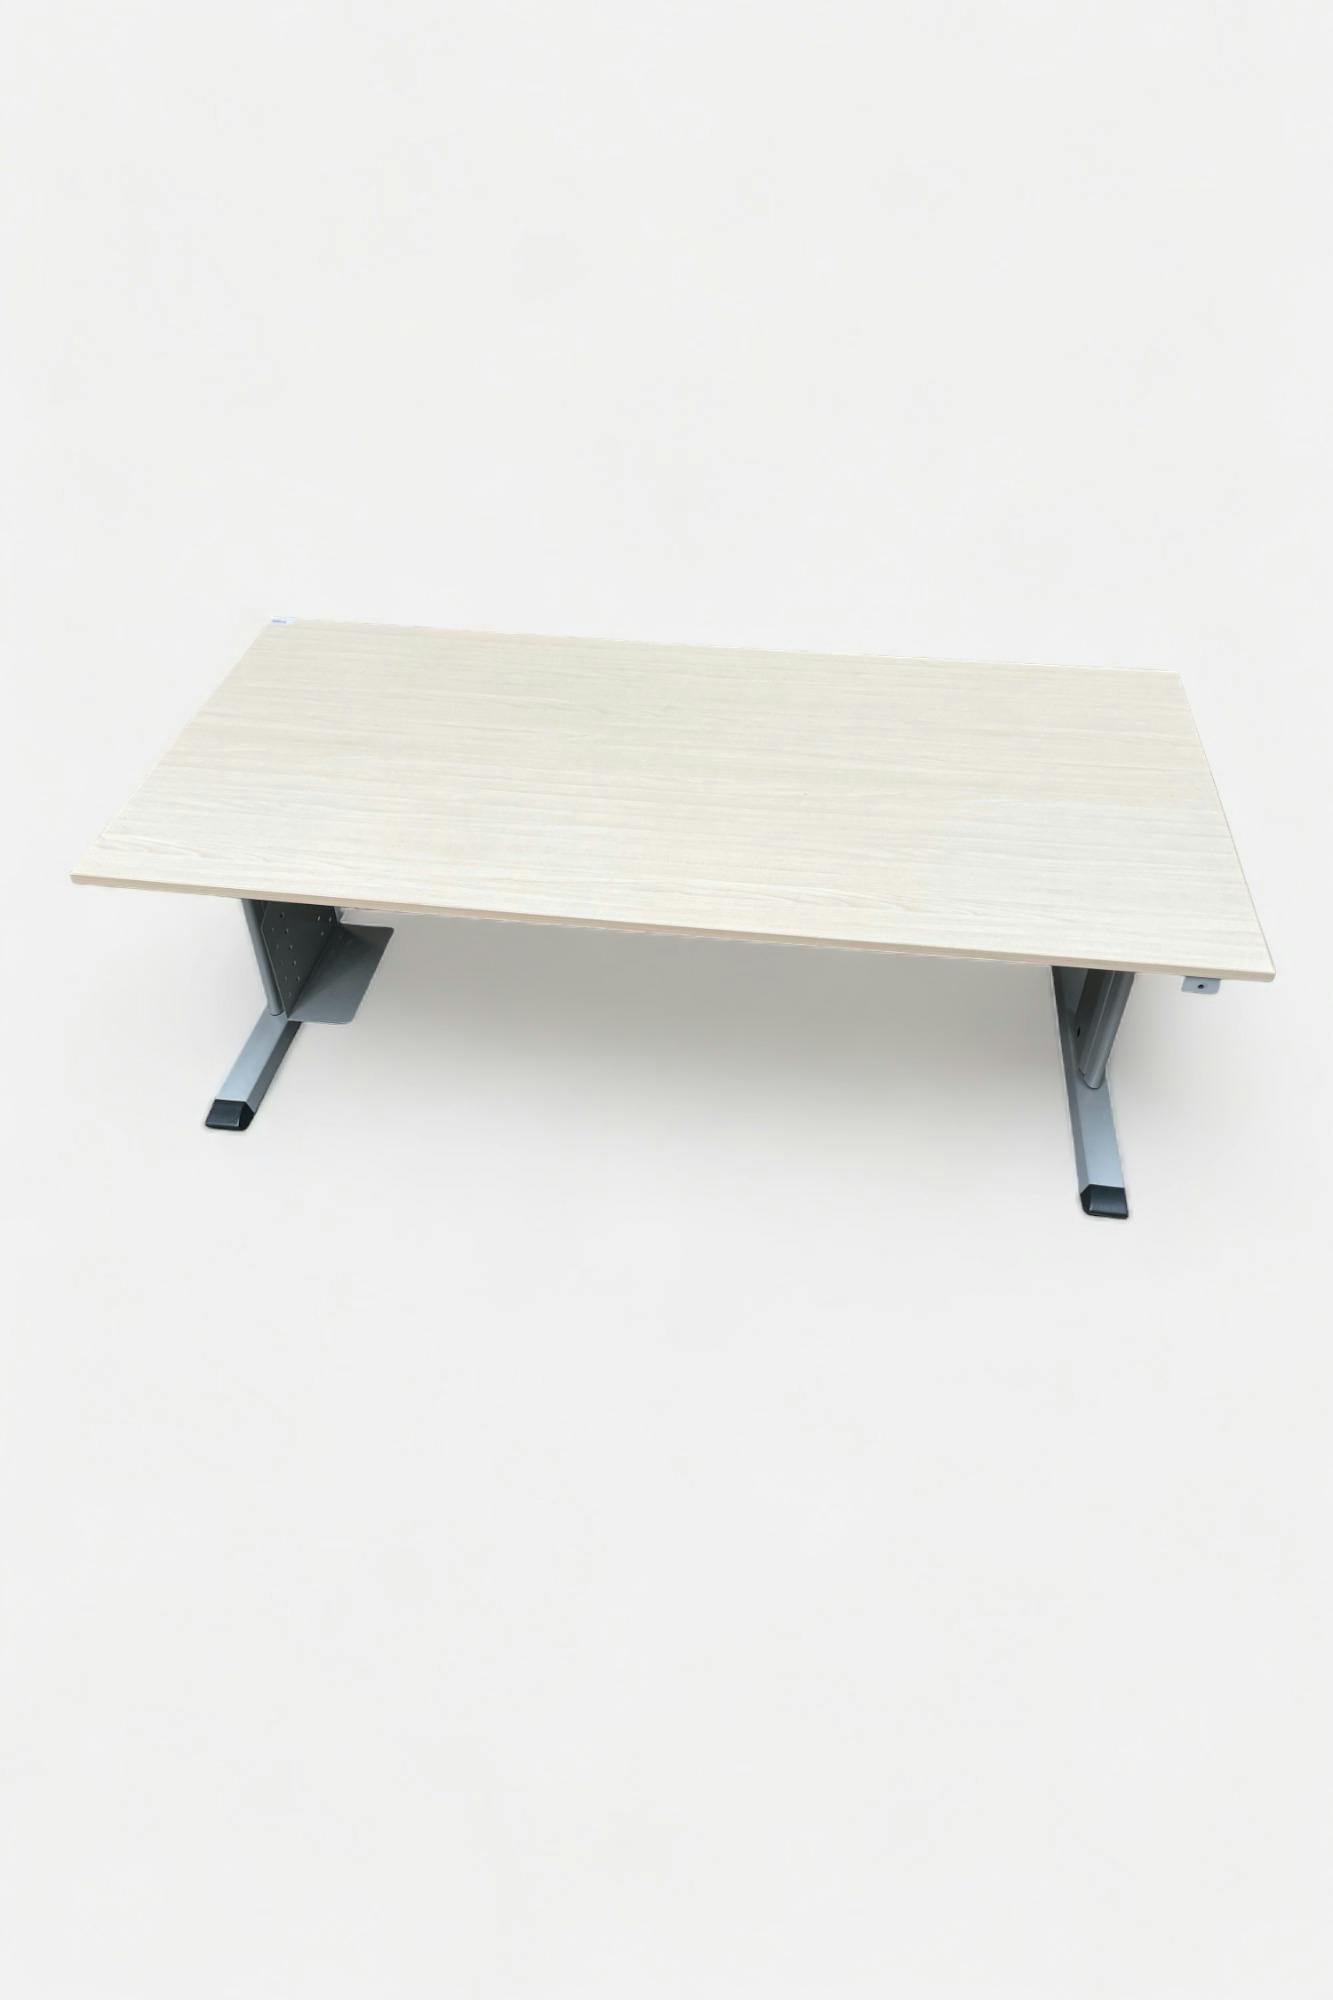 PAMI Wood Desks 180x90cm (adjustable height) - Second hand quality "Desks" - Relieve Furniture